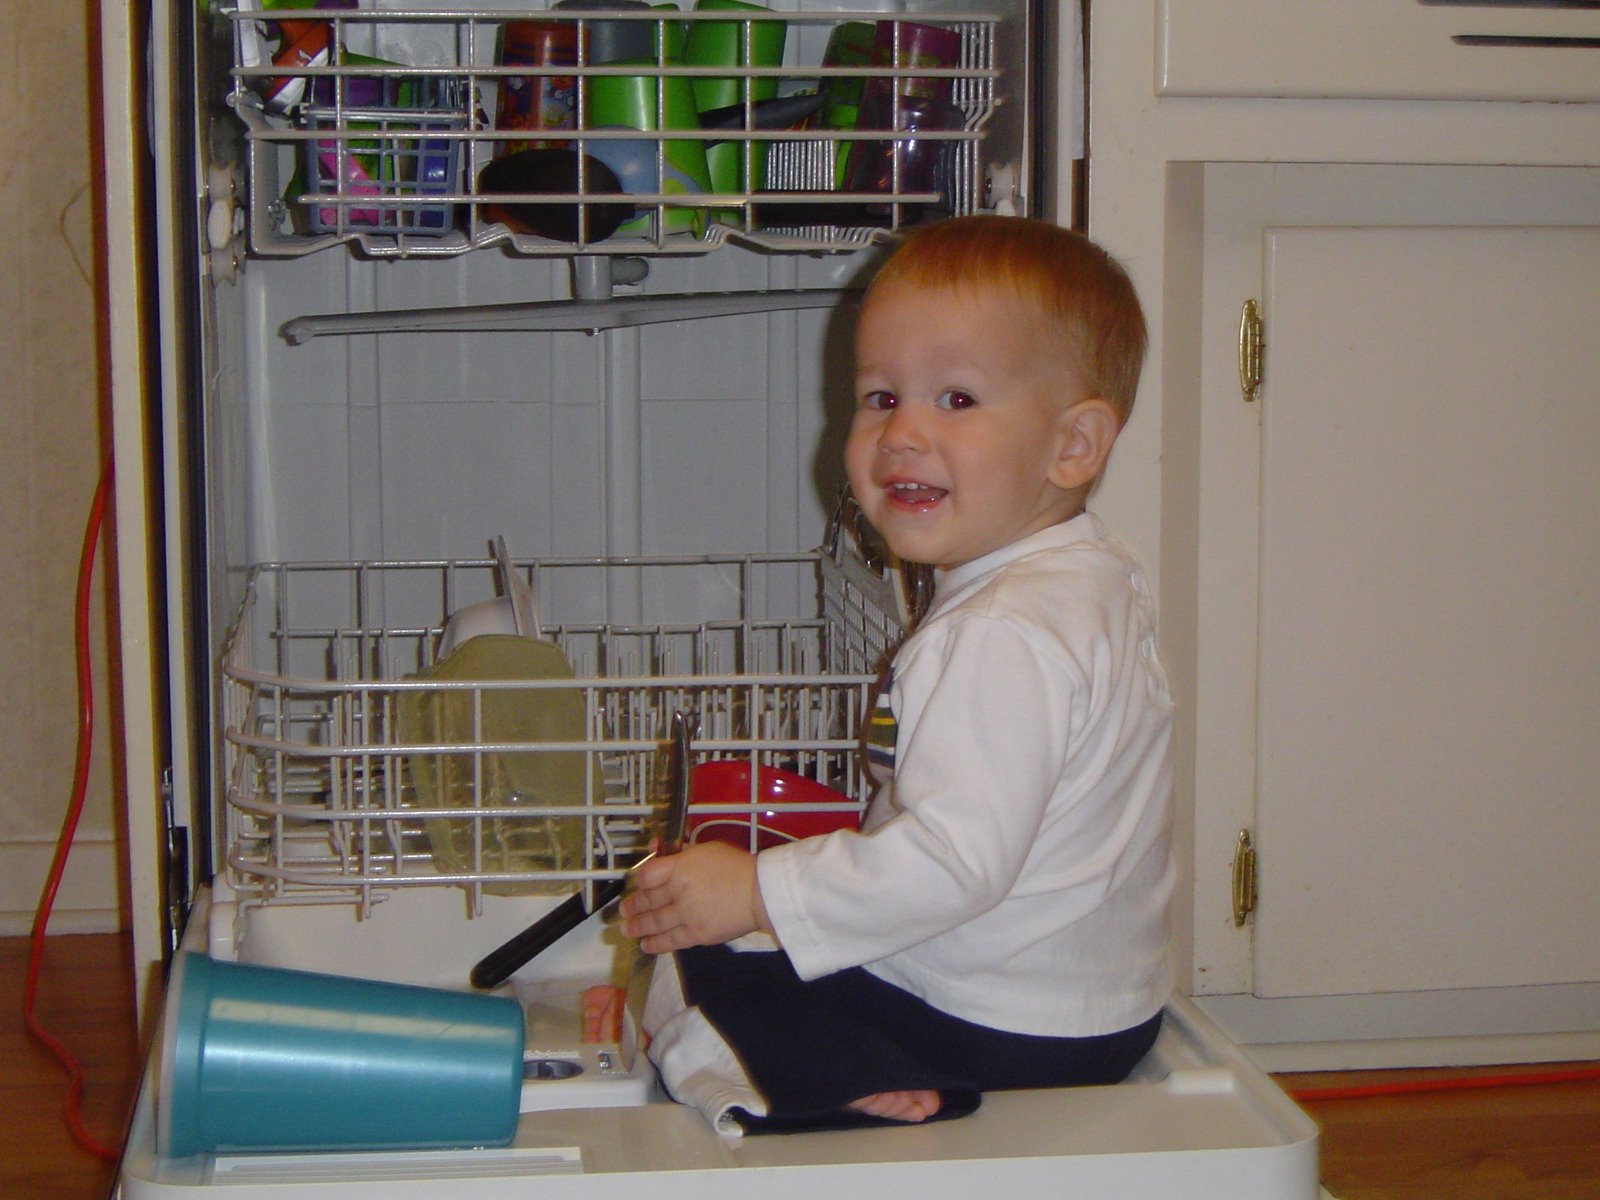 [Jacob+in+dishwasher.JPG]